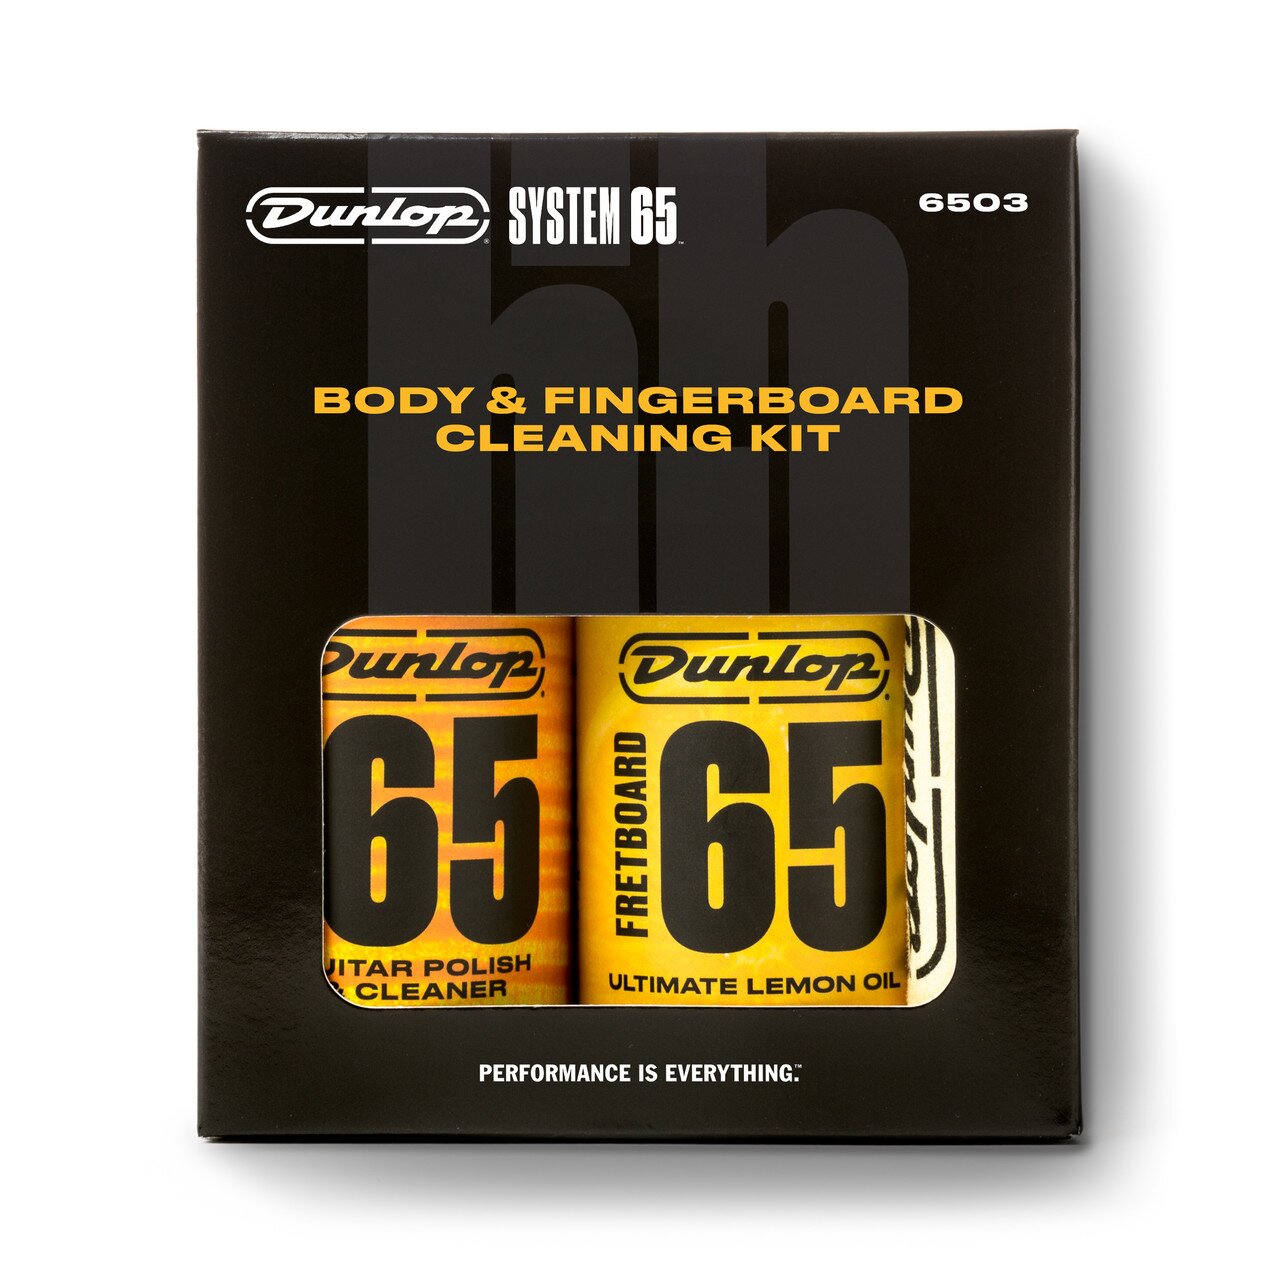 Dunlop 6503 Body & Fingerboard Cleaning Kit (carton de 2 pièces avec 2 chiffons) : photo 1